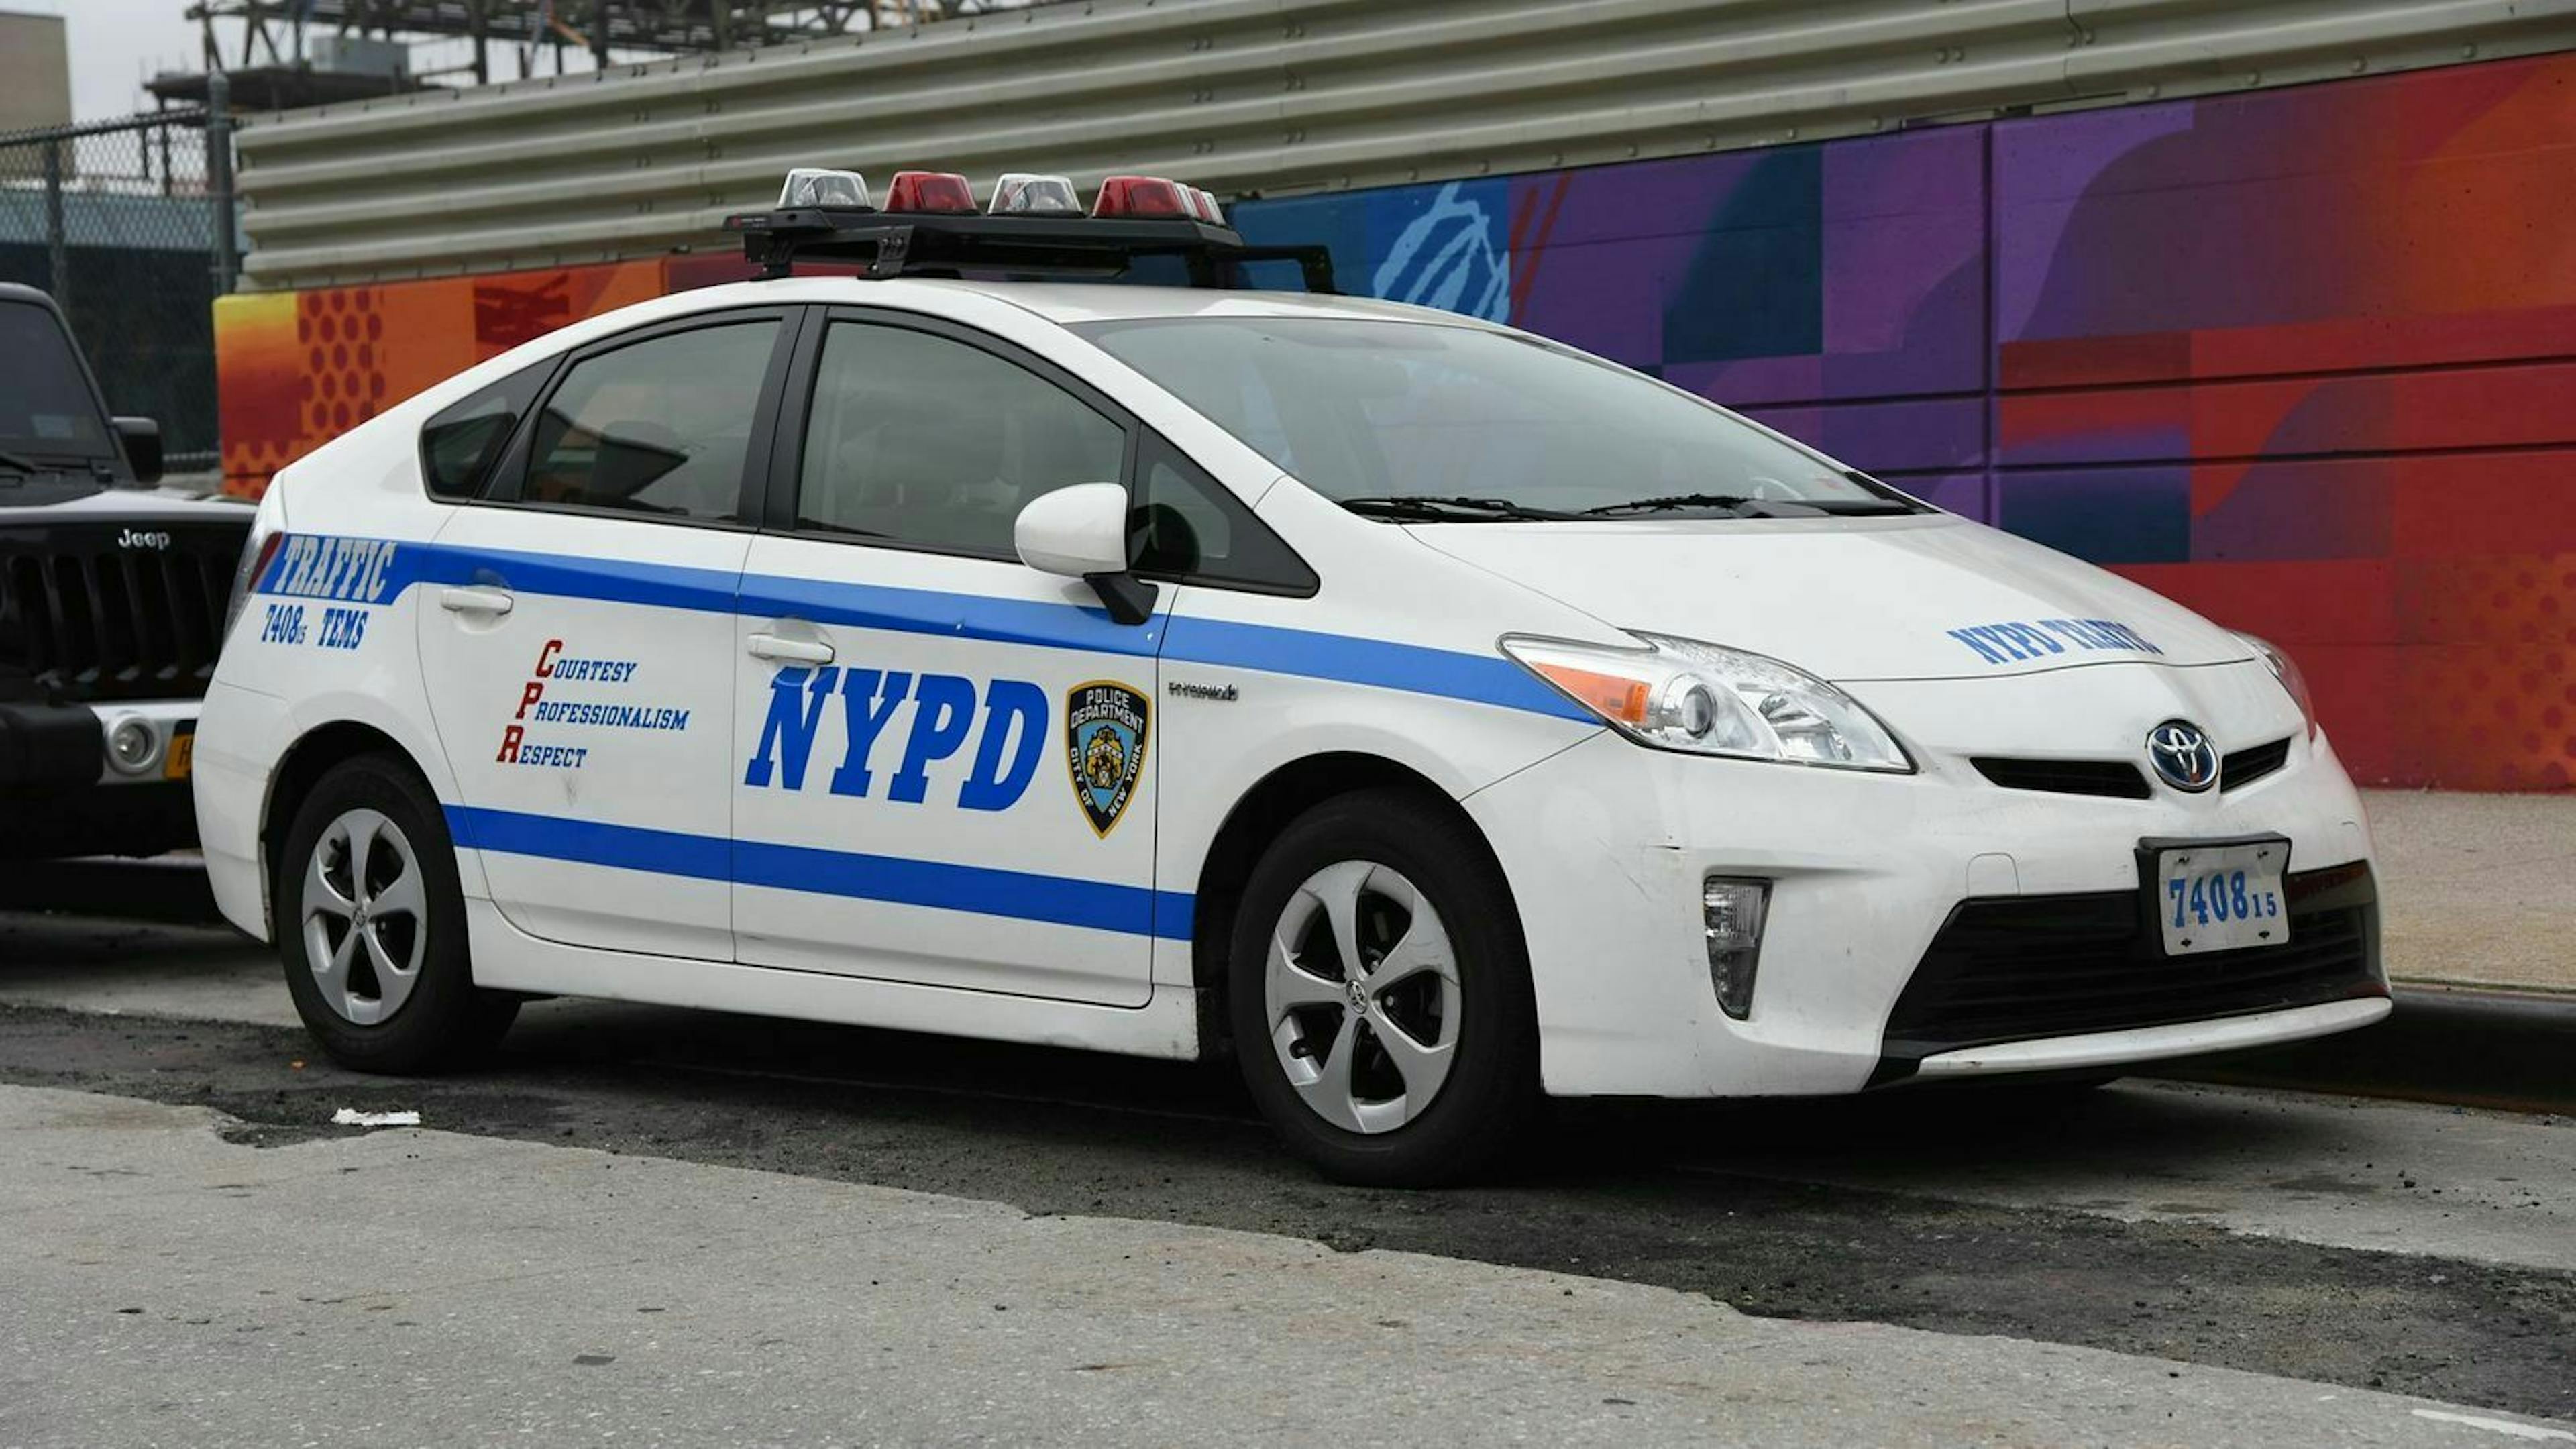 NYPD-Prius am Straßenrand parkend